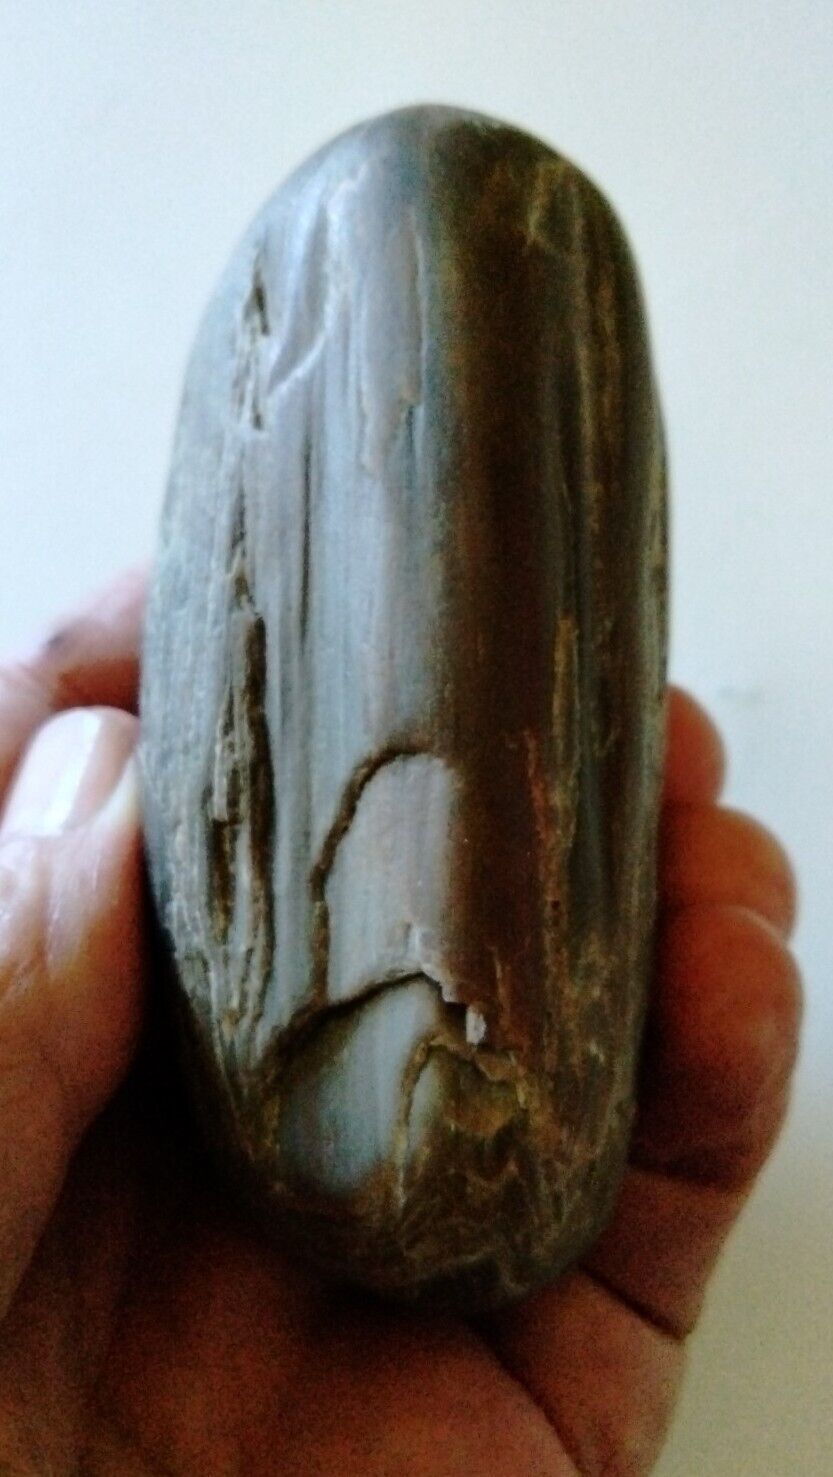 Prehistoric Paleo-American, petrified wood, rock art sculpture, multi tool.